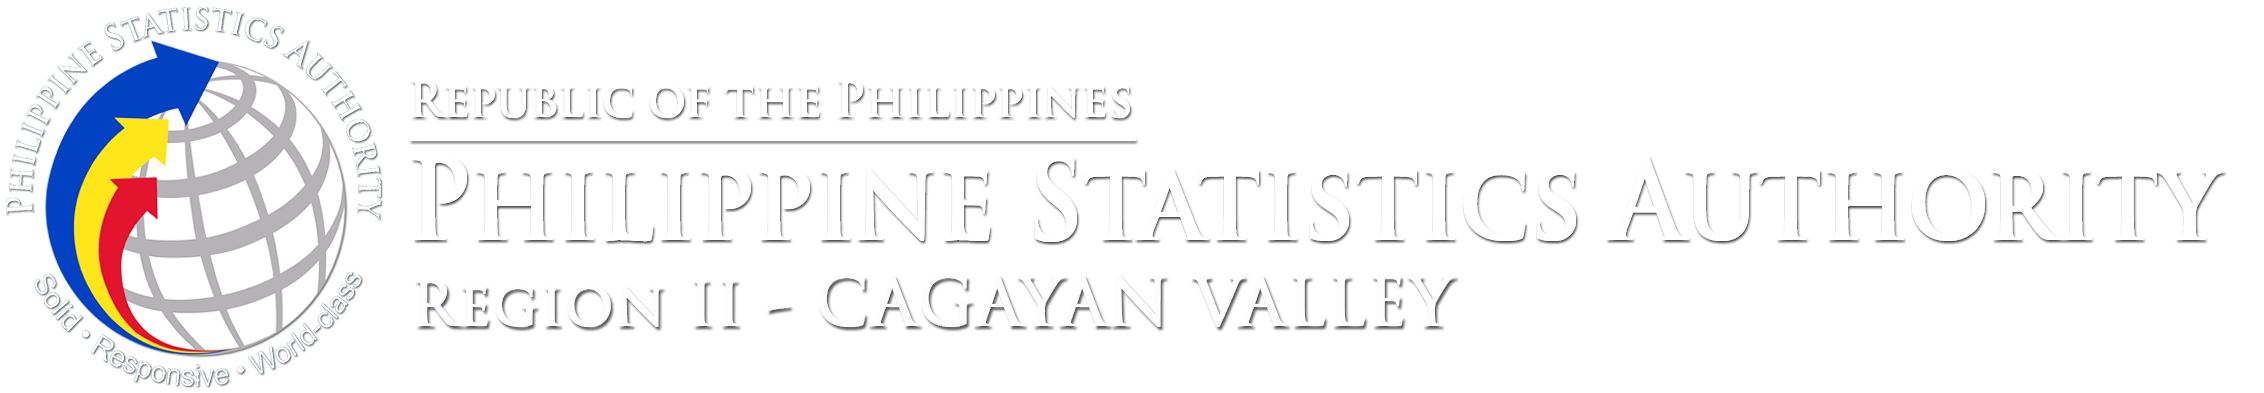 Philippine Statistics Authority Regional Template